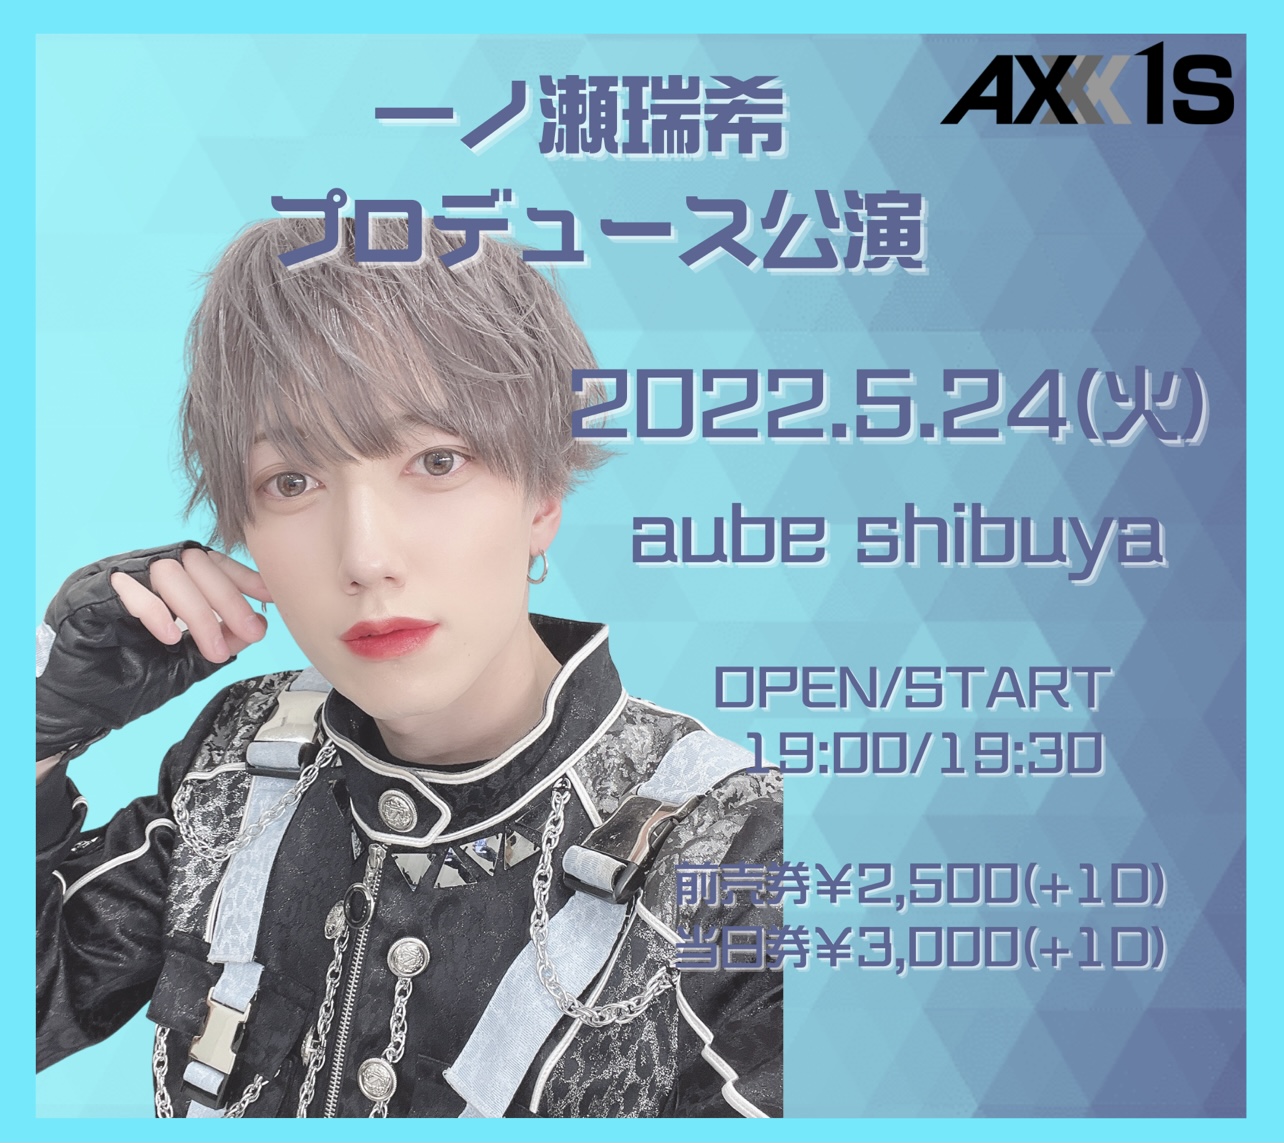 AXXX1S 5/24  一ノ瀬瑞希プロデュース公演＠aube shibuya